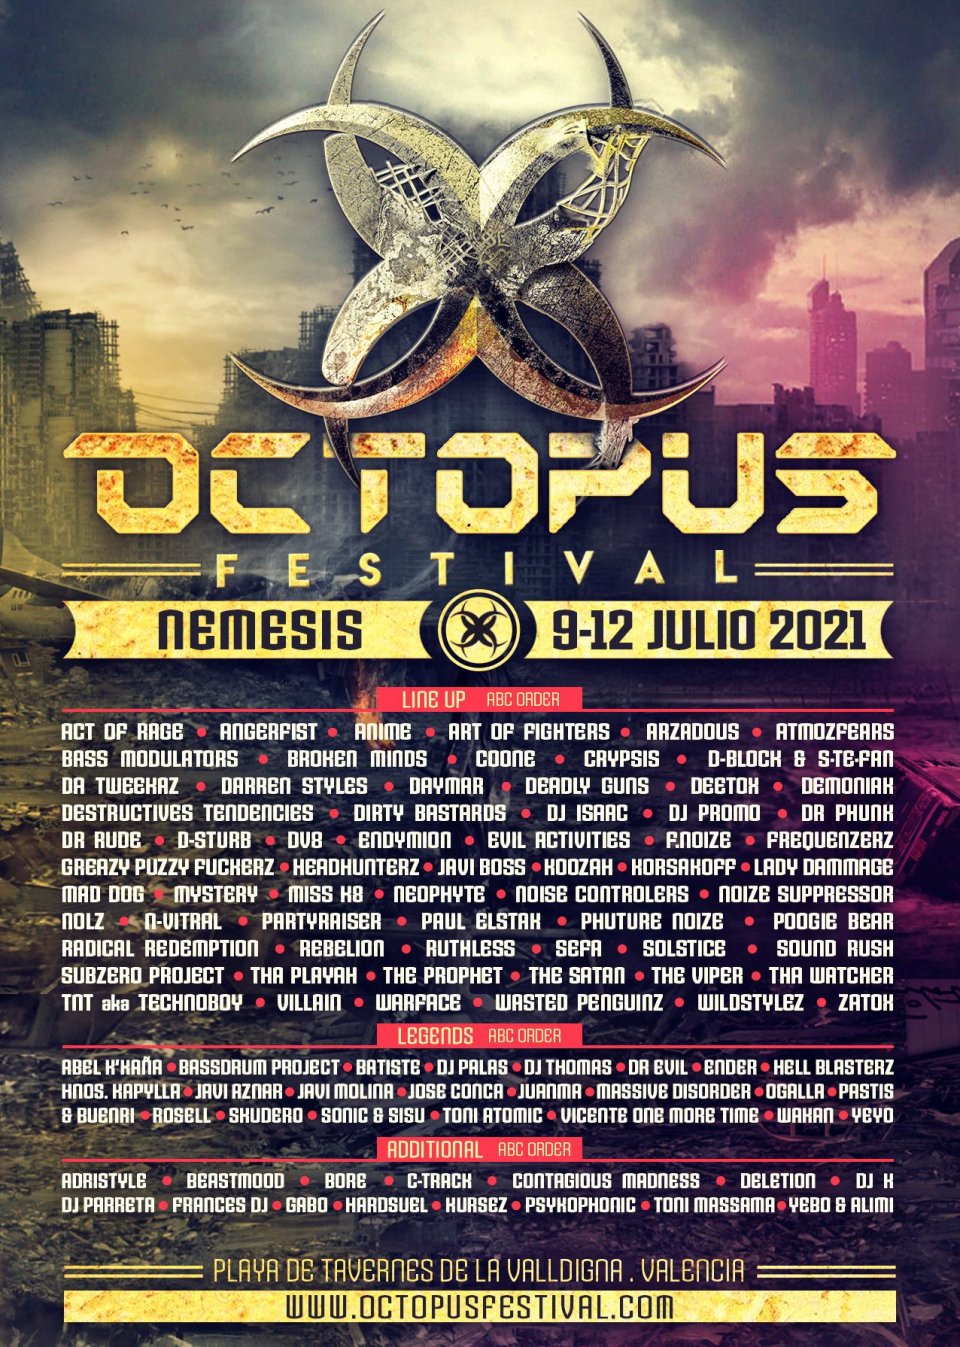 Octopus Festival